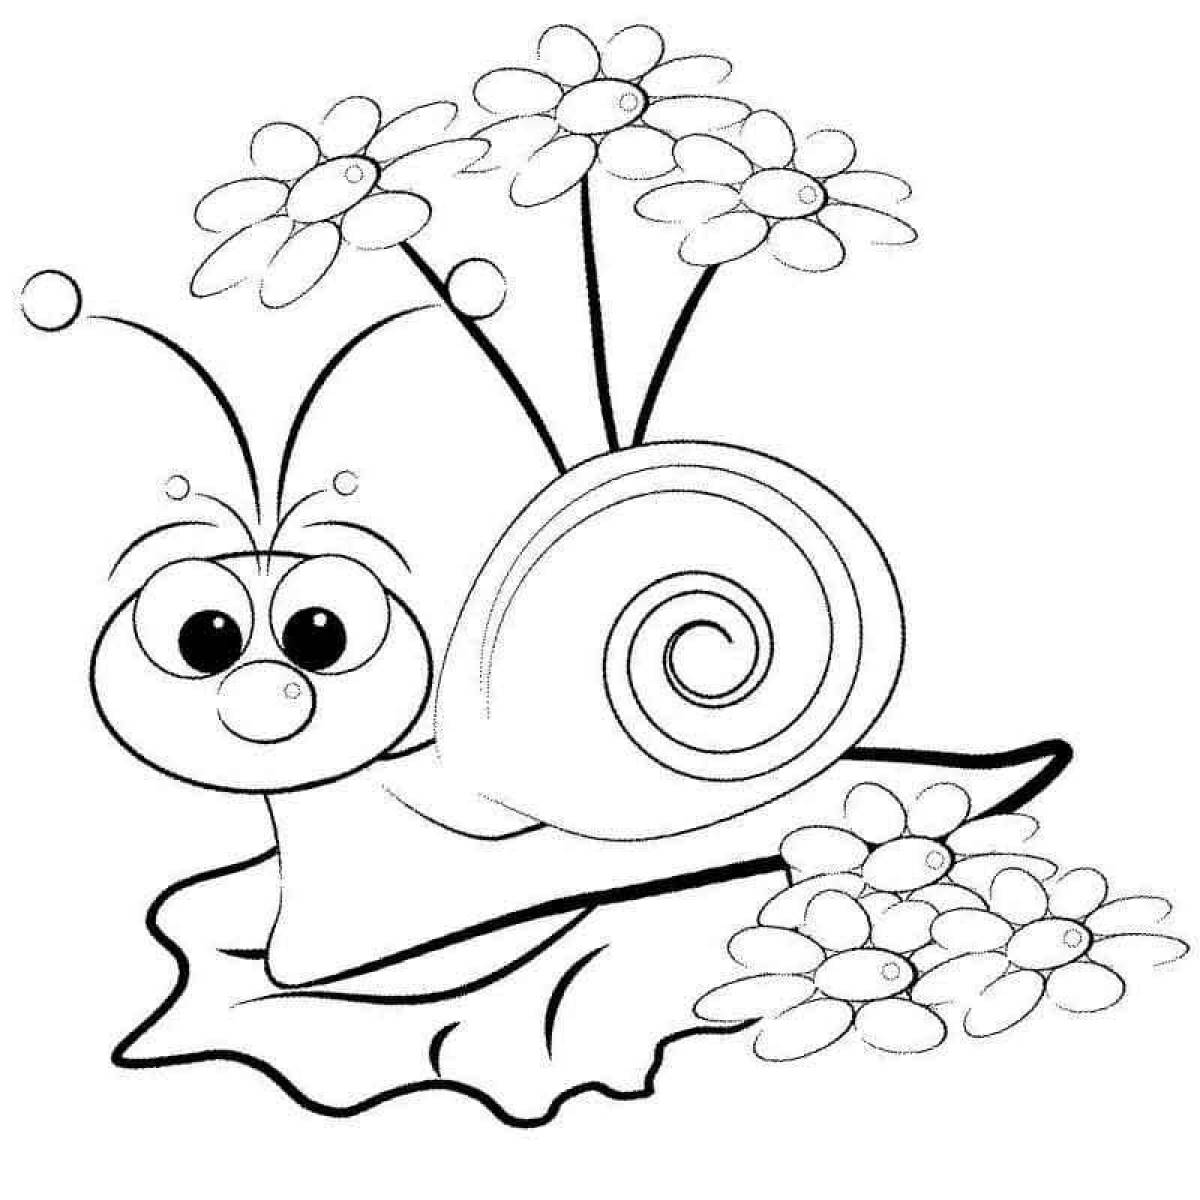 Fantastic snail coloring book for kids